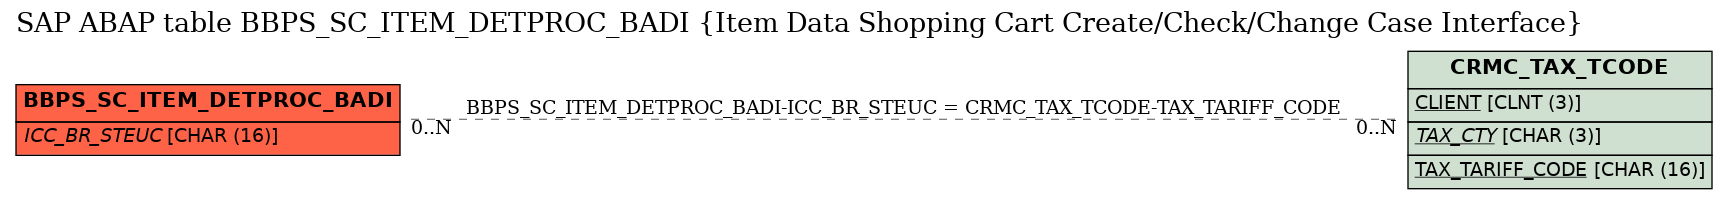 E-R Diagram for table BBPS_SC_ITEM_DETPROC_BADI (Item Data Shopping Cart Create/Check/Change Case Interface)